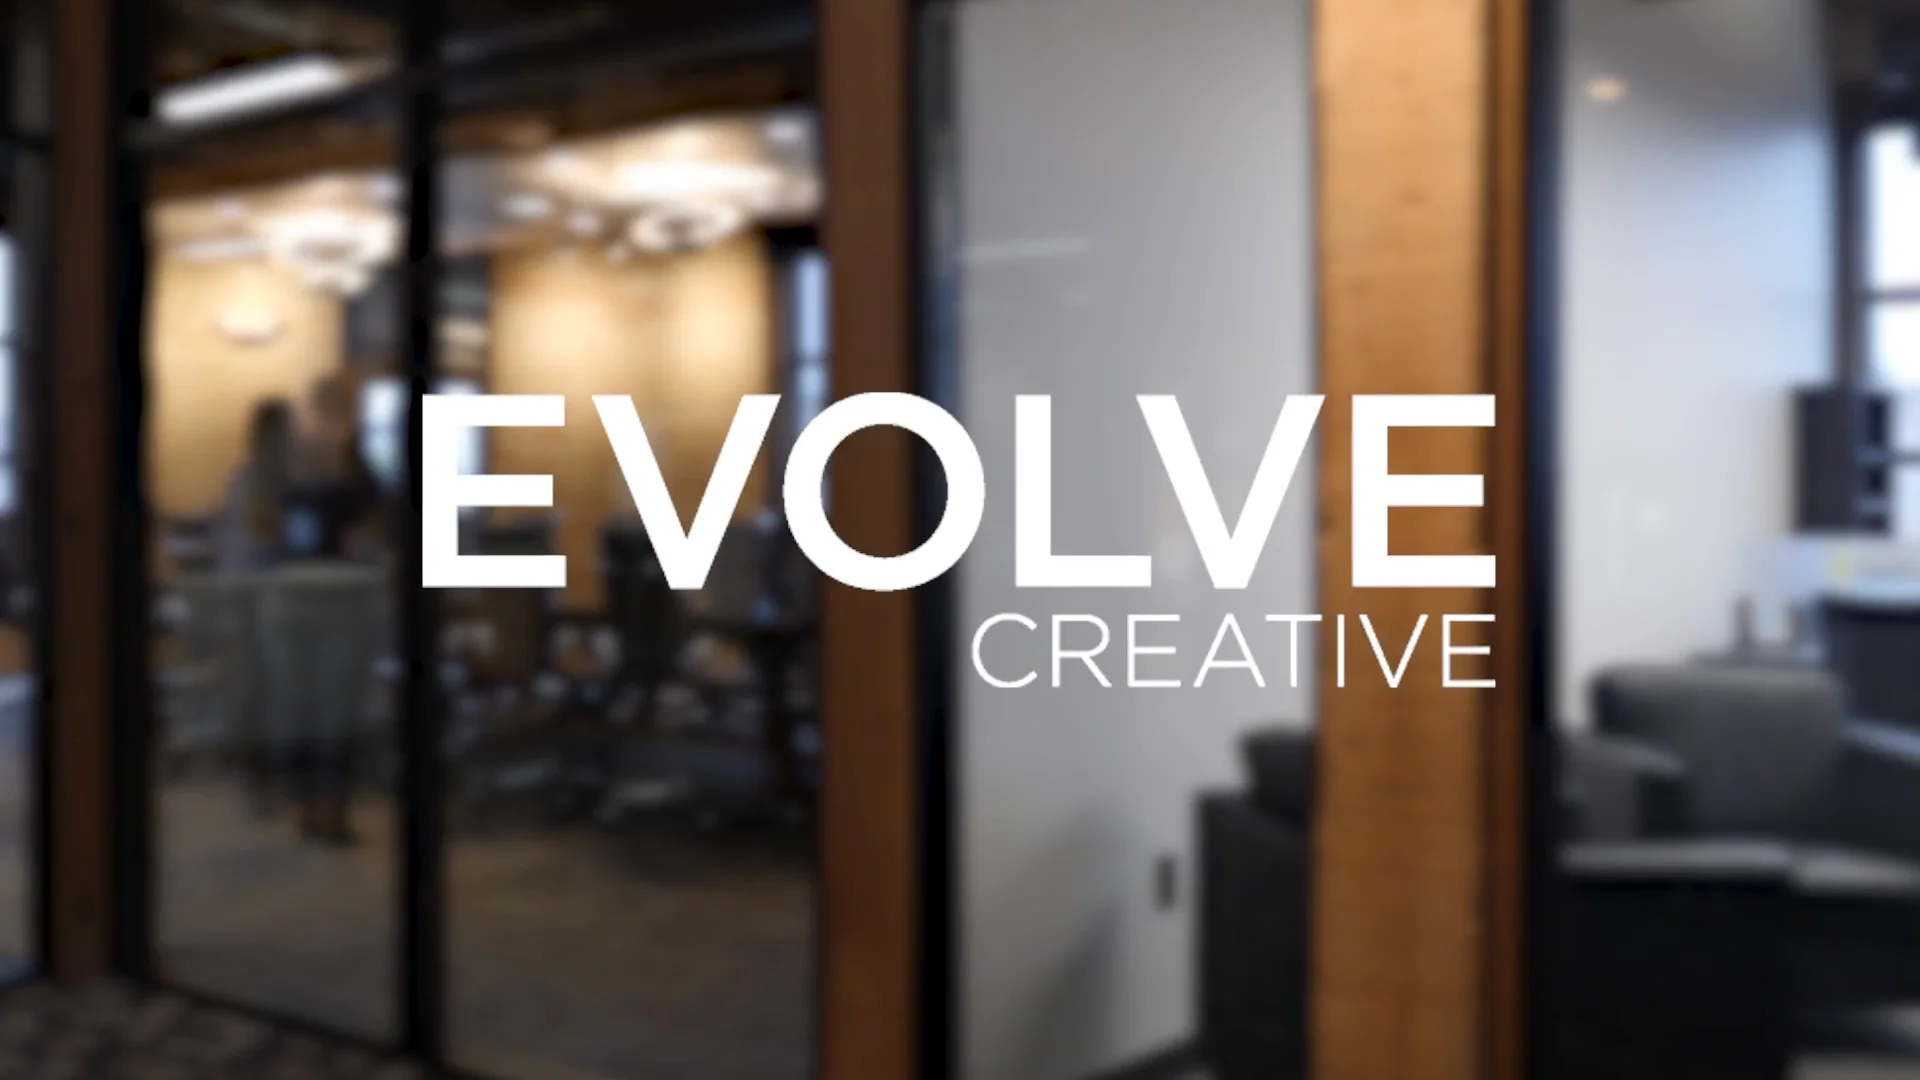 Evolve Creative